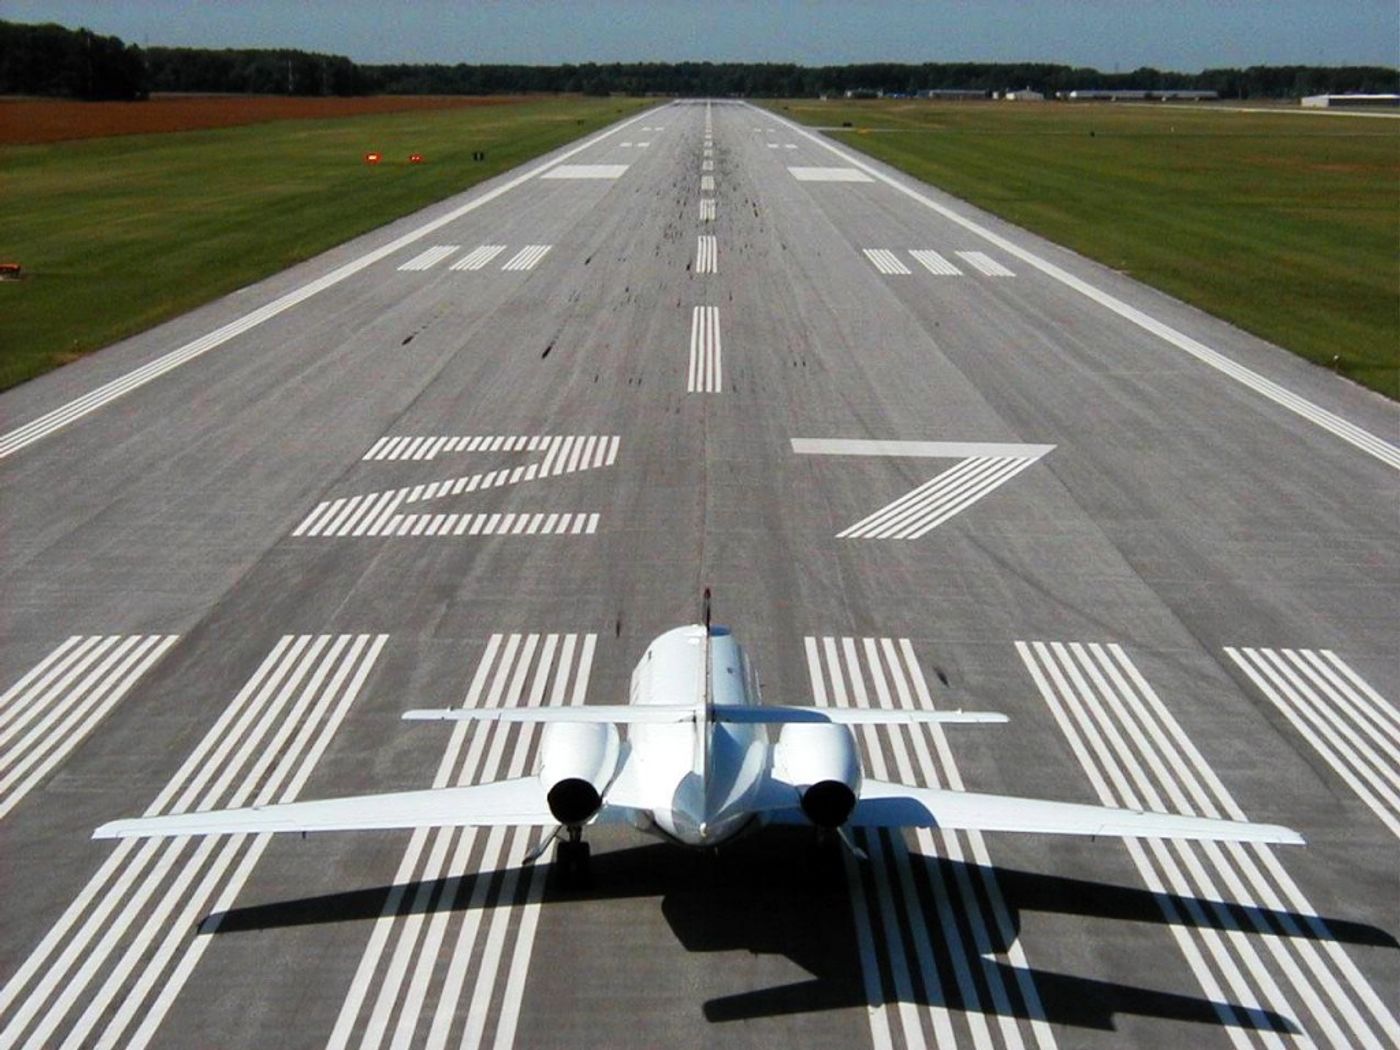 airport runway, credit: http://blog.elevatingtheupstate.com